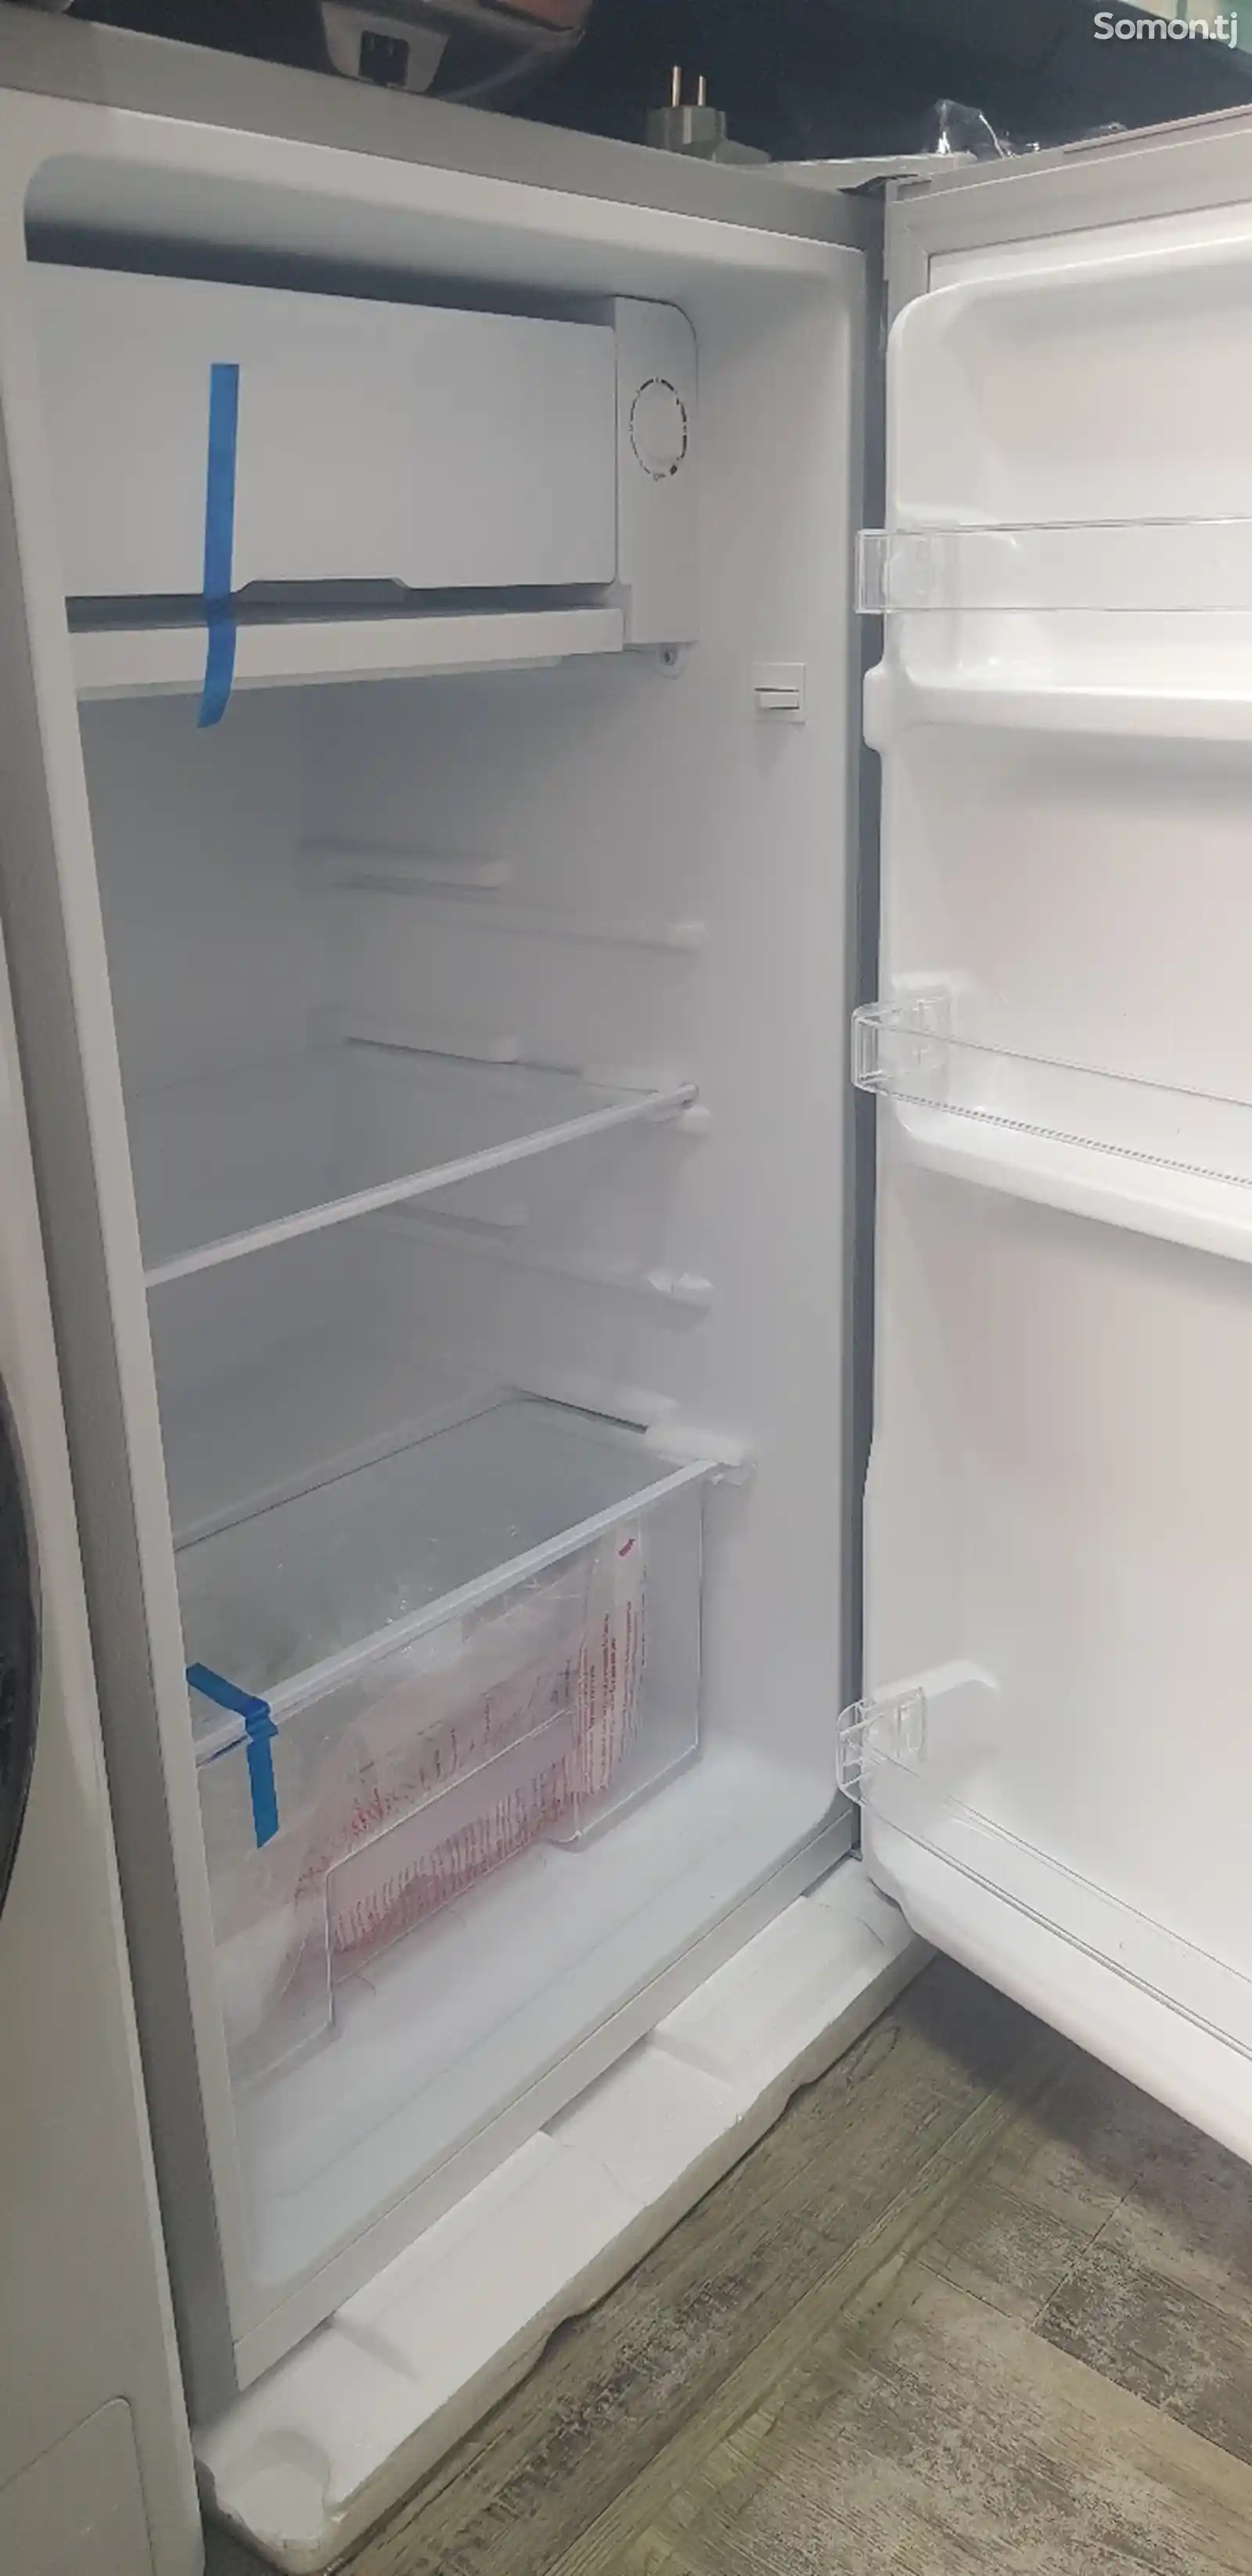 Холодильник Rosso-3